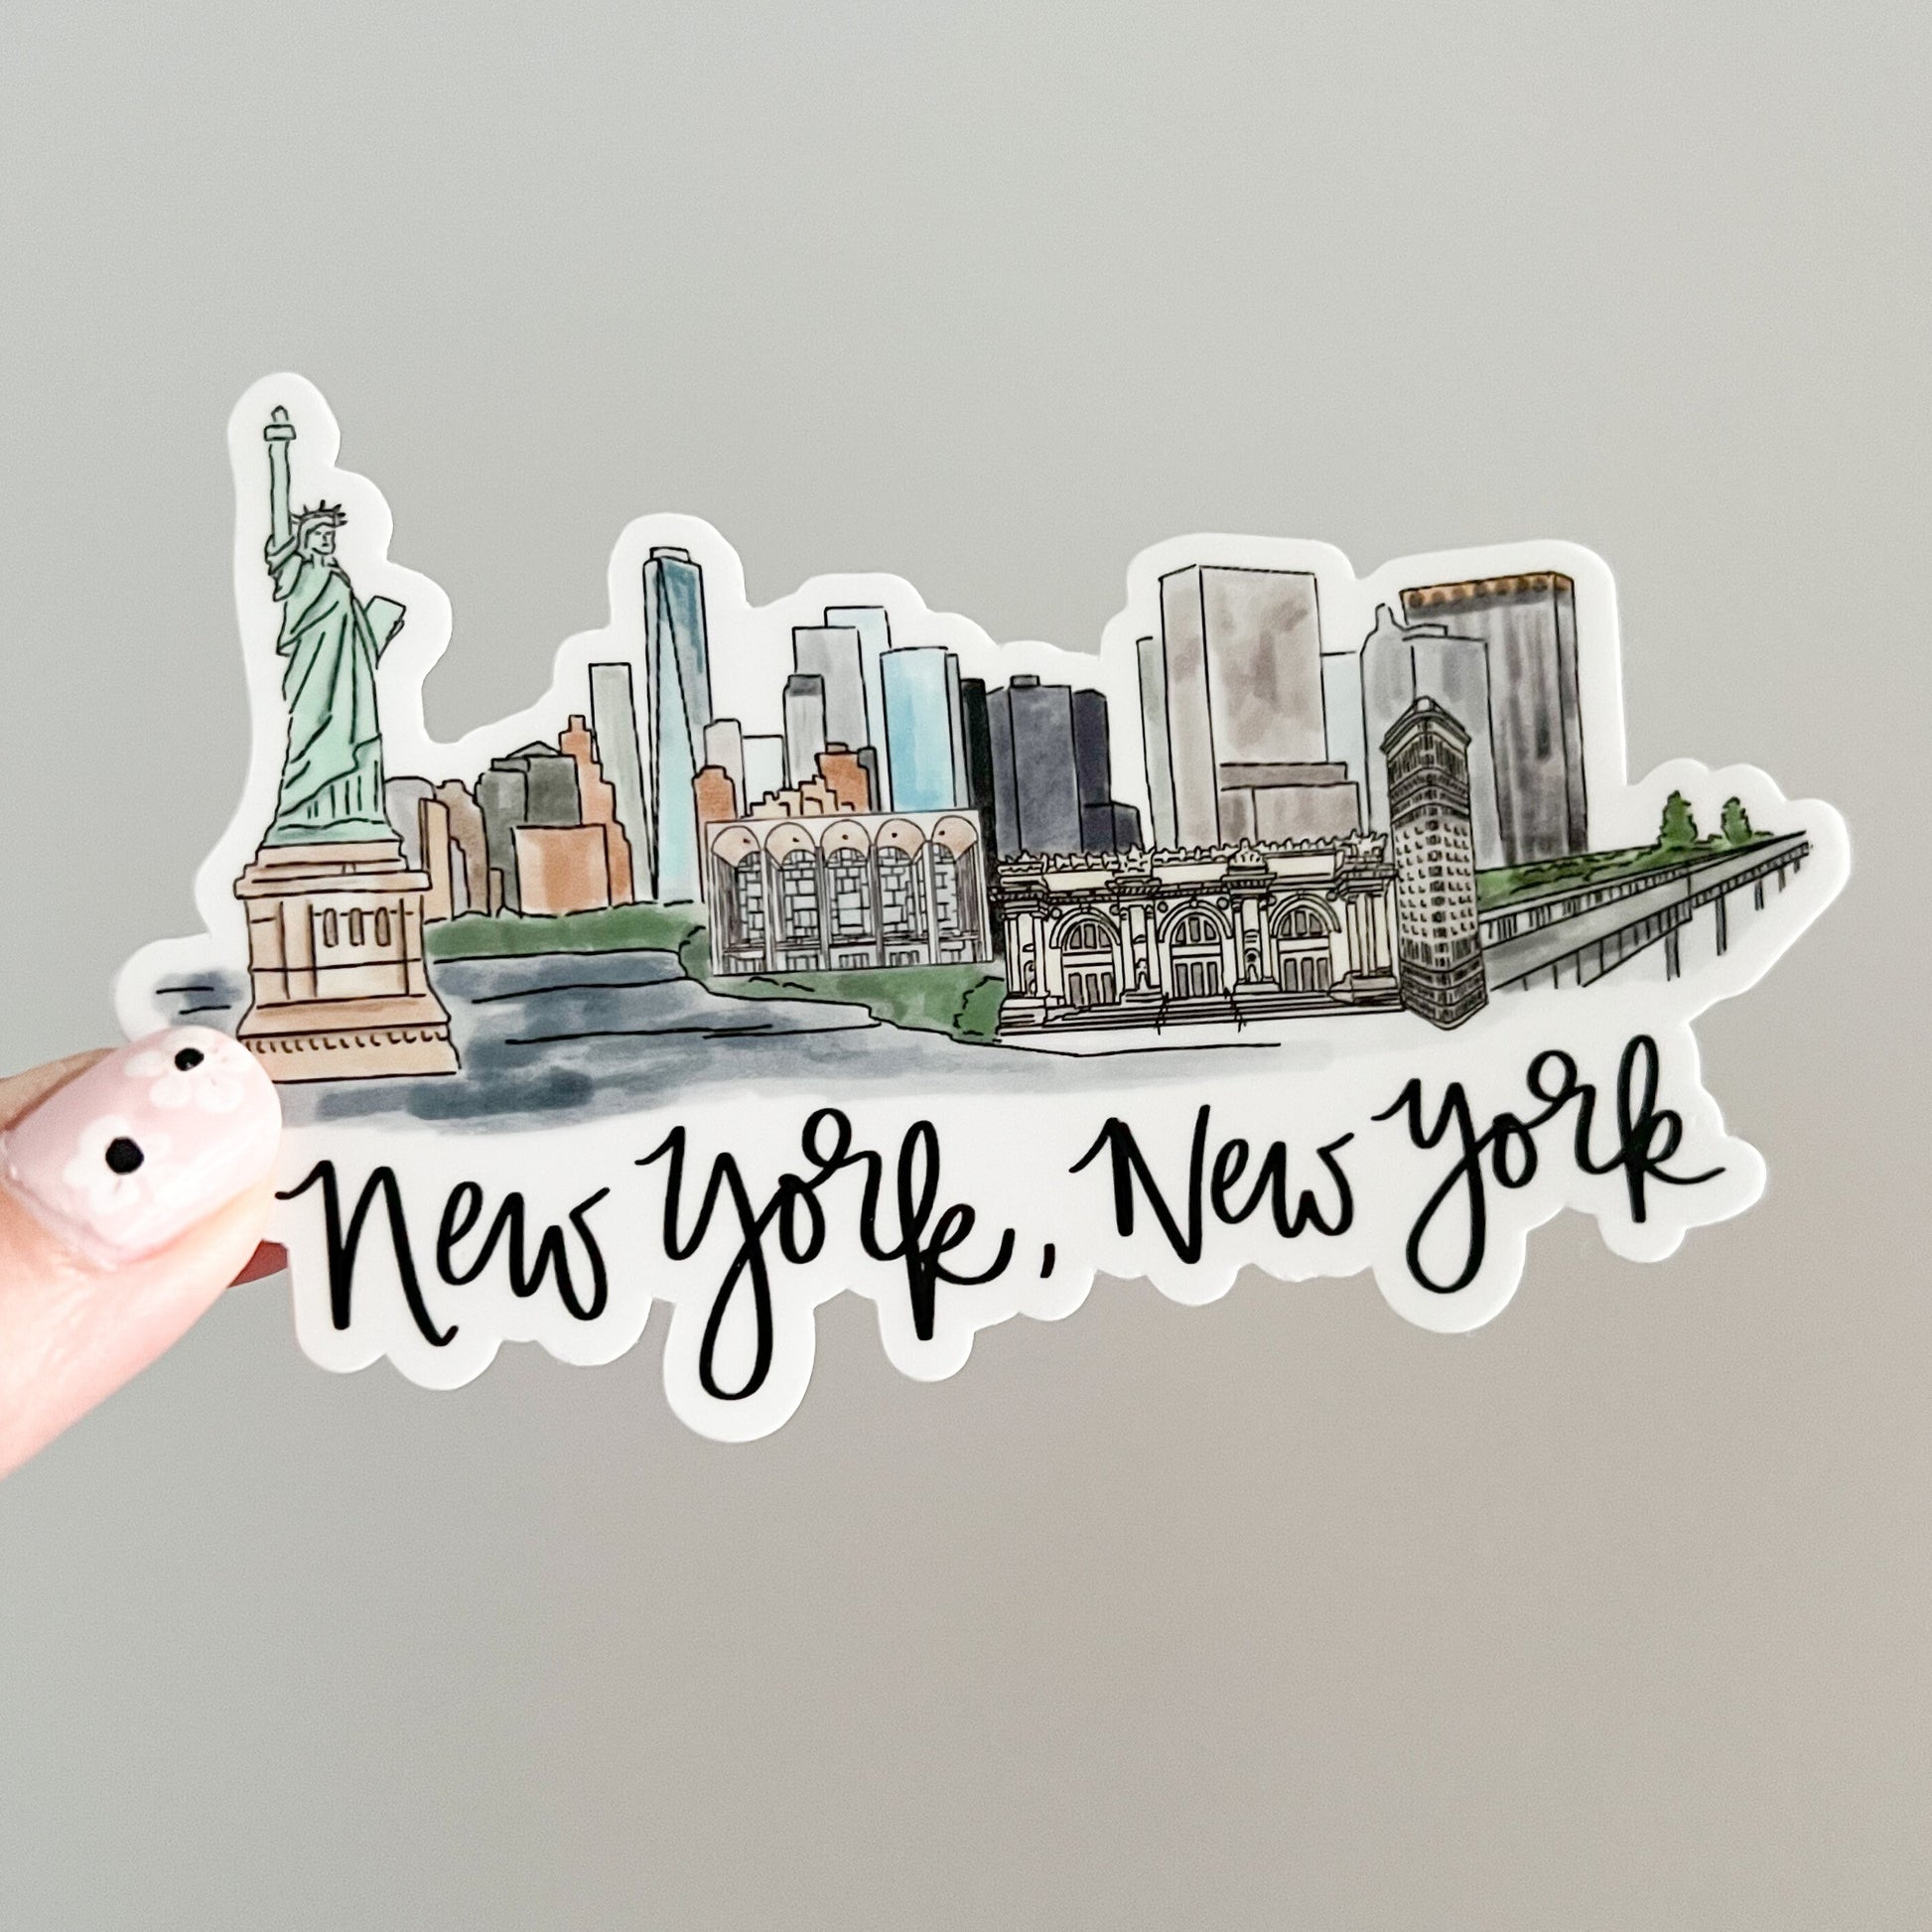 New York City (New York) Skyline/landmark sticker